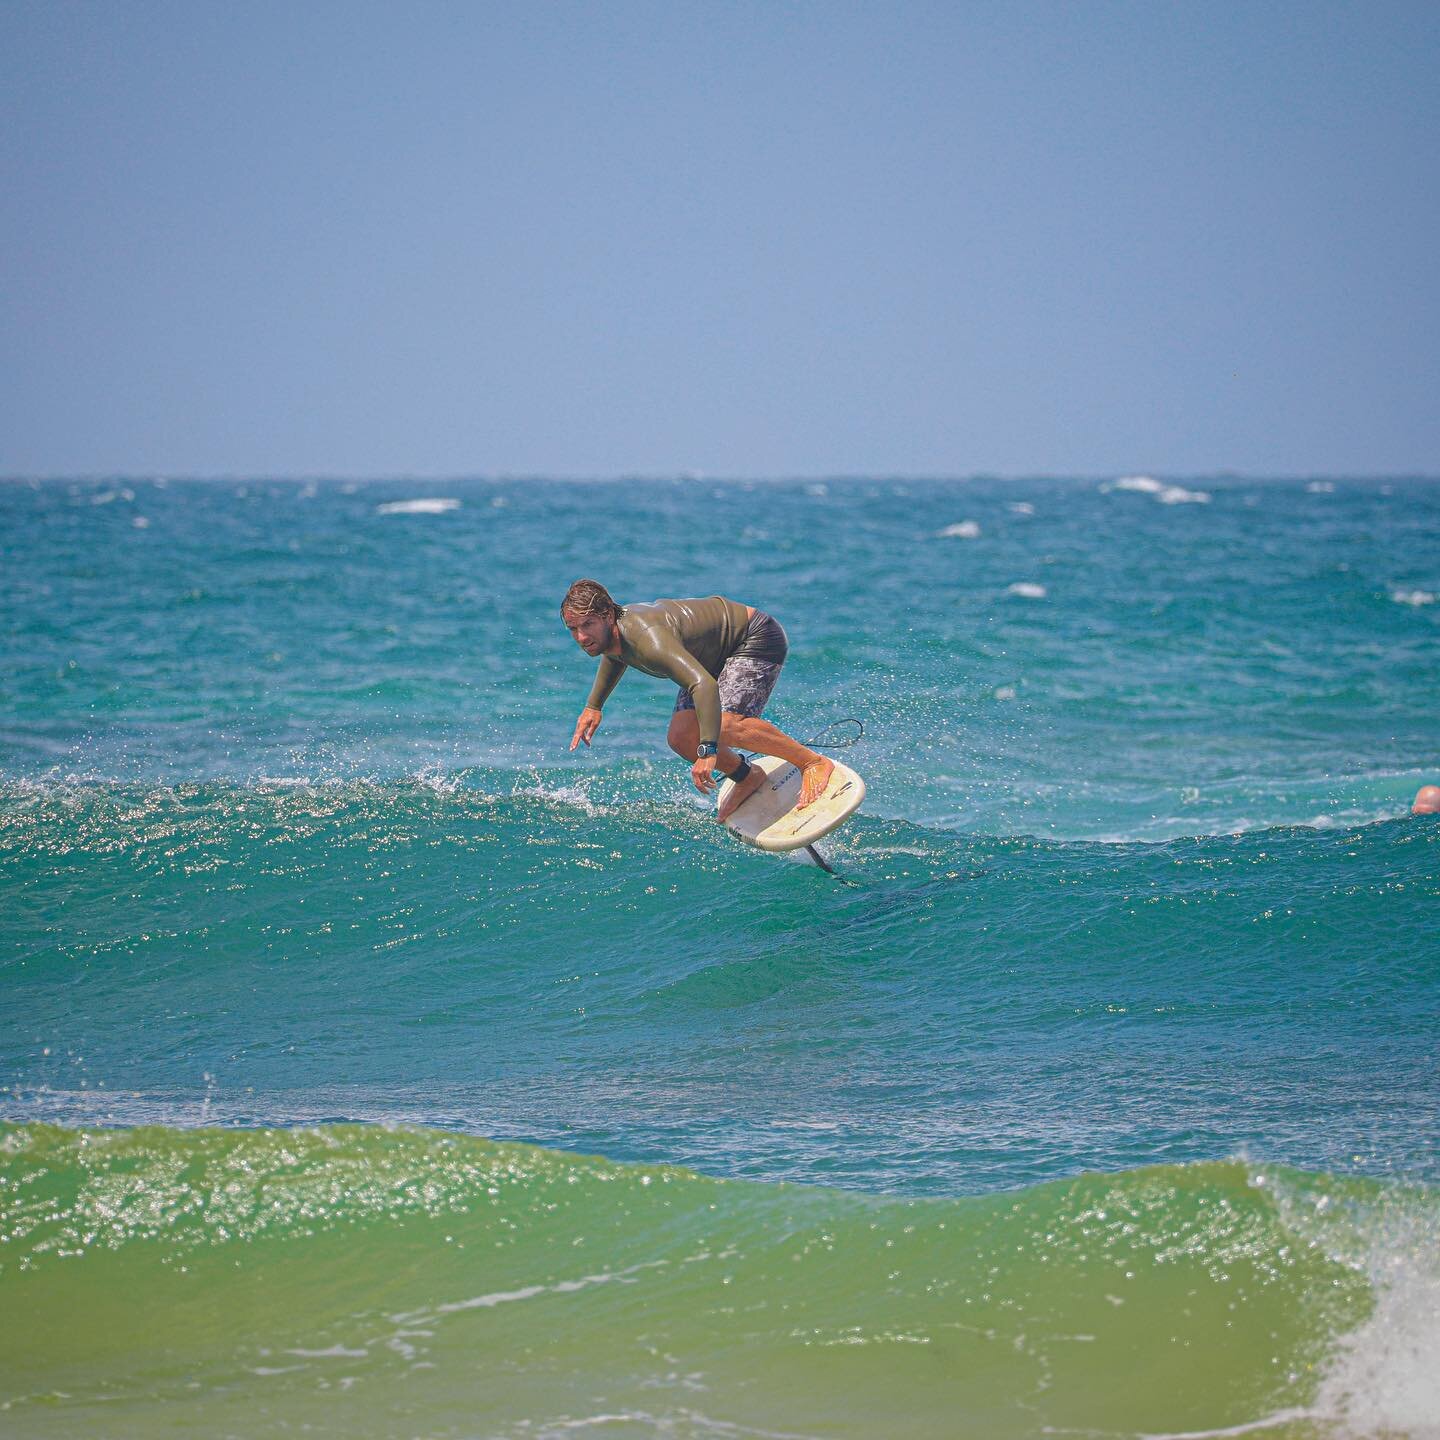 #surfing #sydney #australia #supsurfing #videocontent #surfboards #videomarketing #canon #surfmedia #sunova #startboardsup #axisfoil #surfingnsw #surfingaustralia #surfingqld #fanaticsup #bodyboarding #foilsurf #efoil #windsurf #wingfoil  #suprace #a